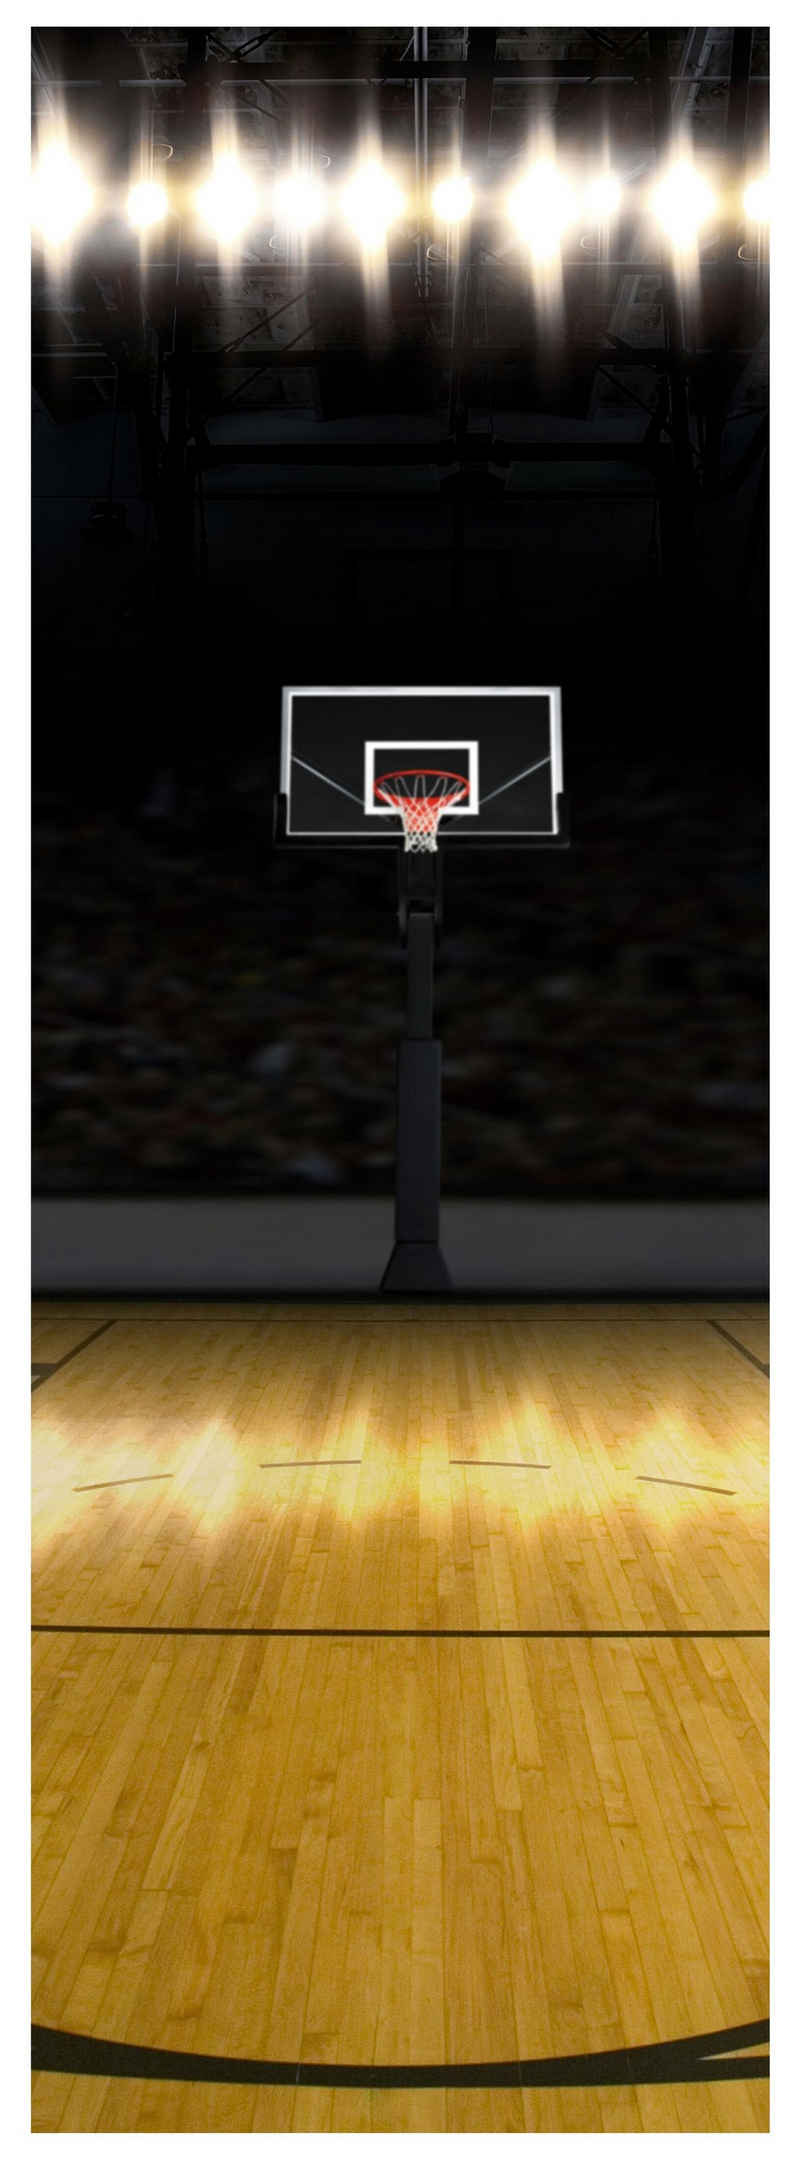 wandmotiv24 Türtapete Basketball Platz, glatt, Fototapete, Wandtapete, Motivtapete, matt, selbstklebende Dekorfolie